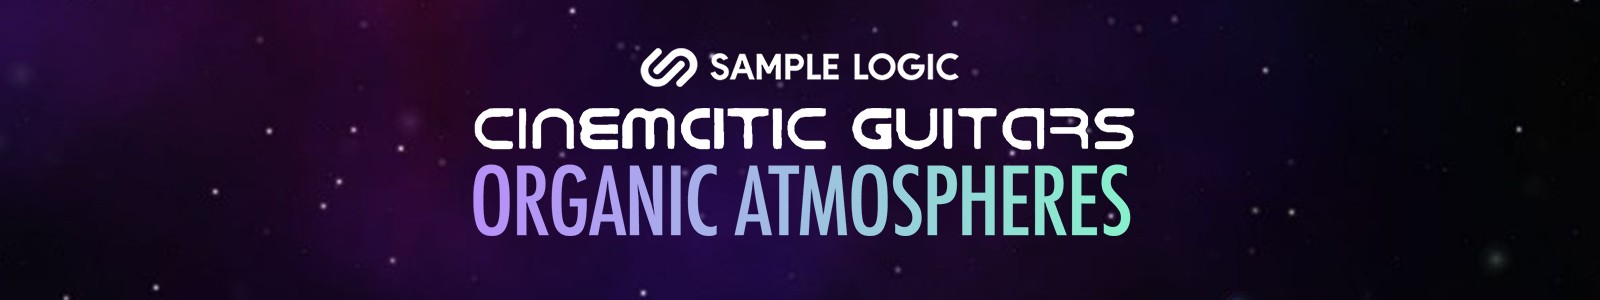 Sample Logic Cinematic Guitars Organic Atmospheres